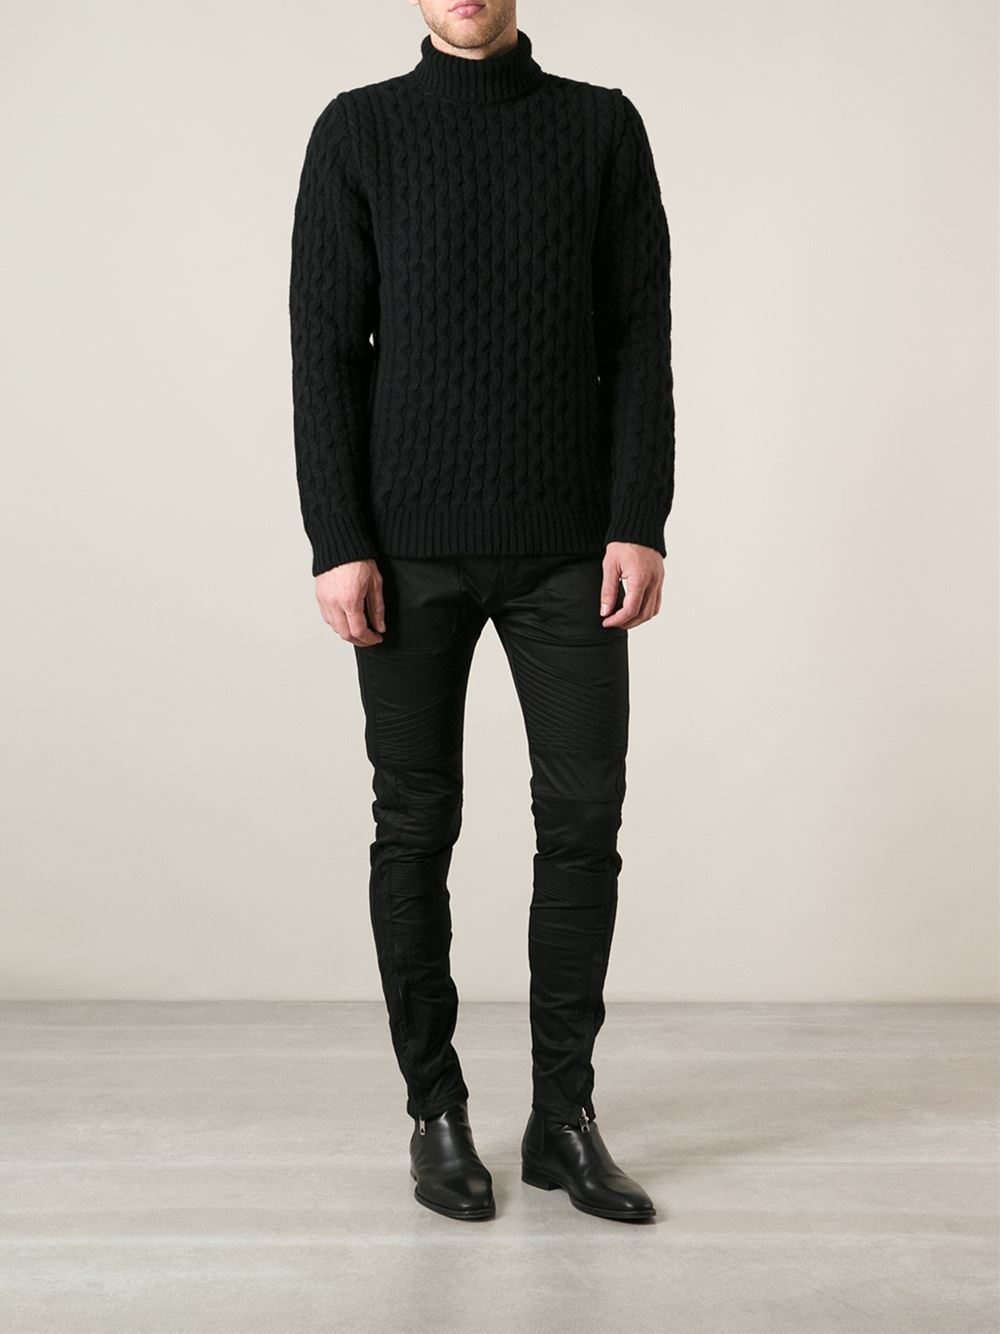 Lyst Diesel Cable Knit Turtleneck Sweater in Black for Men